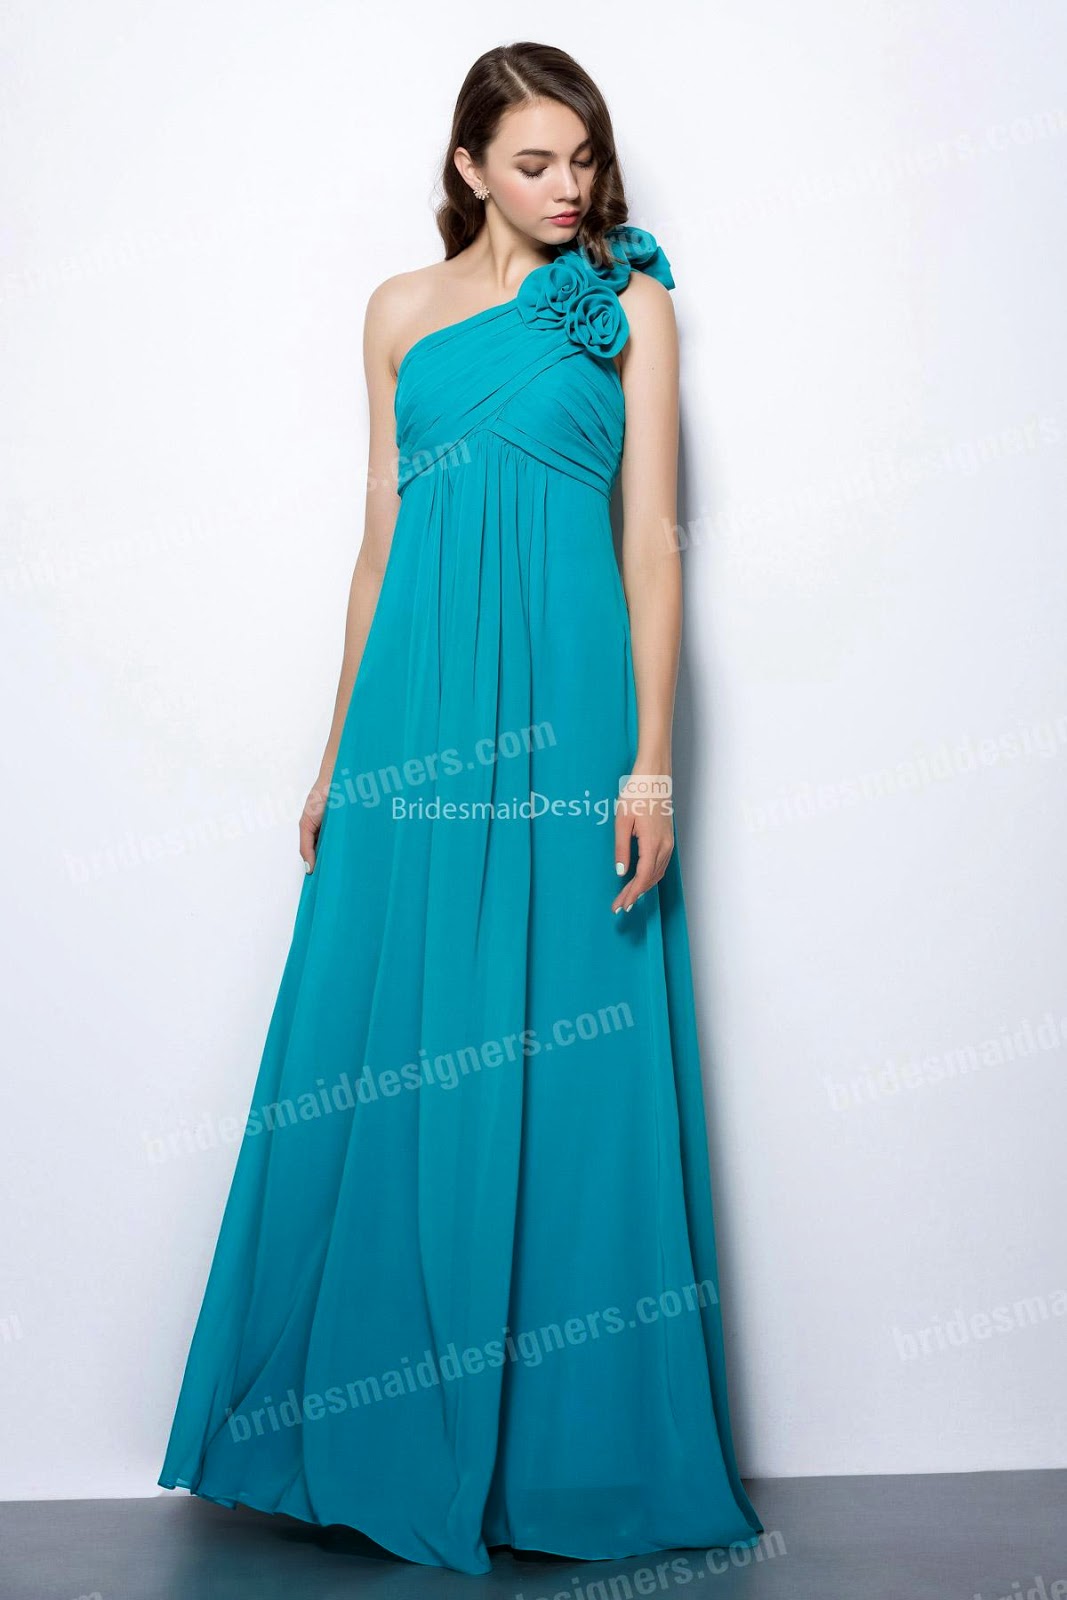 http://www.bridesmaiddesigners.com/empire-waist-one-shoulder-long-chiffon-turquoise-bridesmaid-dress-1059.html